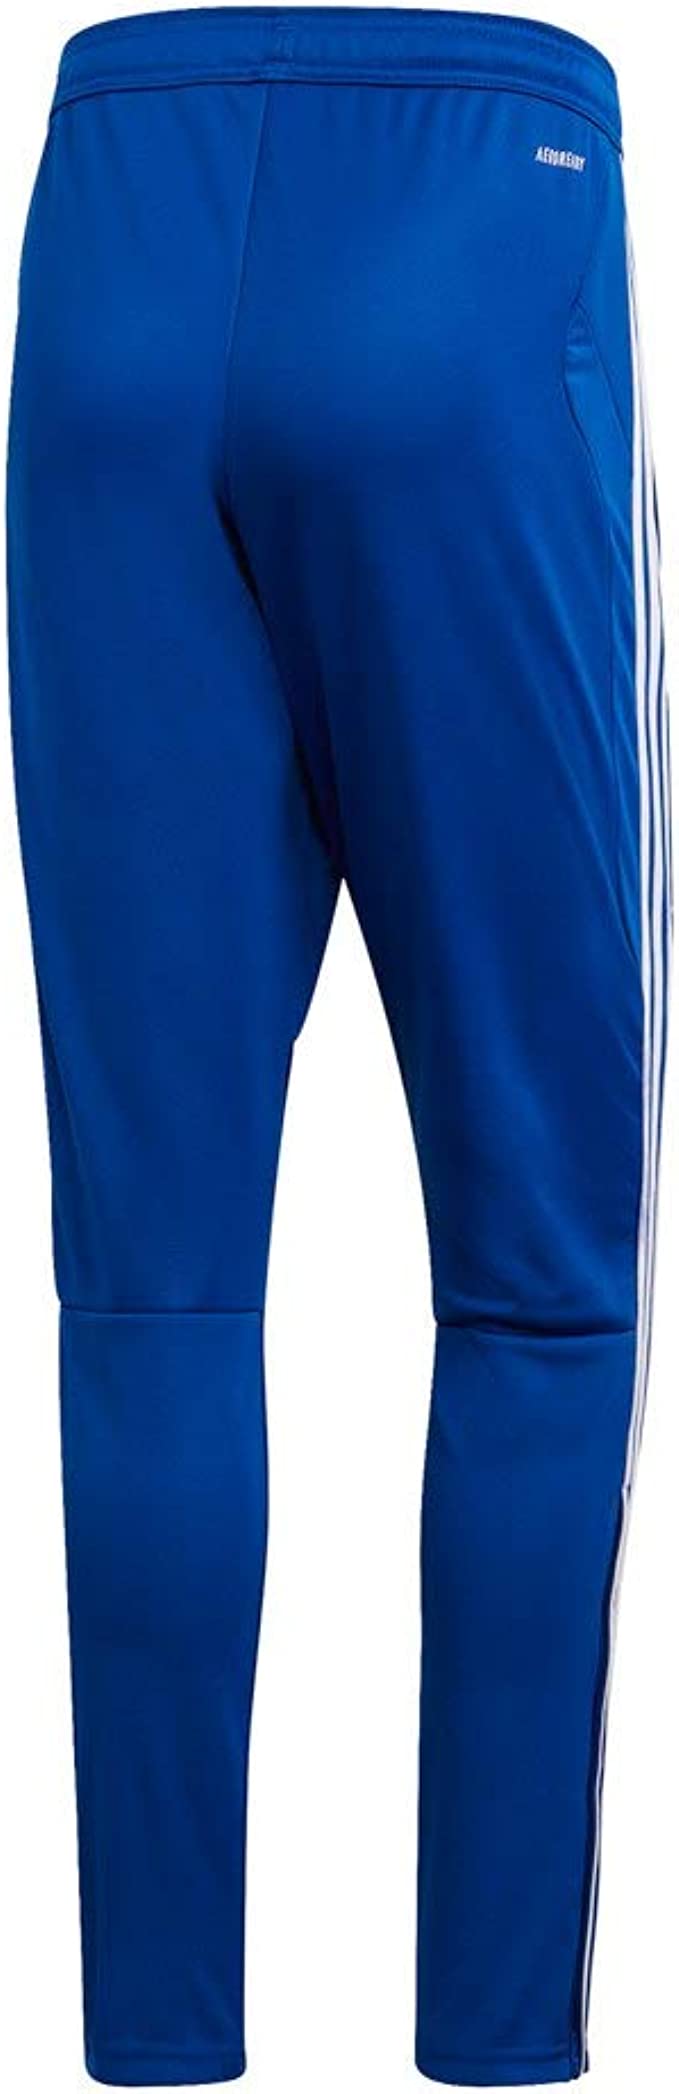 adidas Training Trousers Linear Tiro 19 - Blue